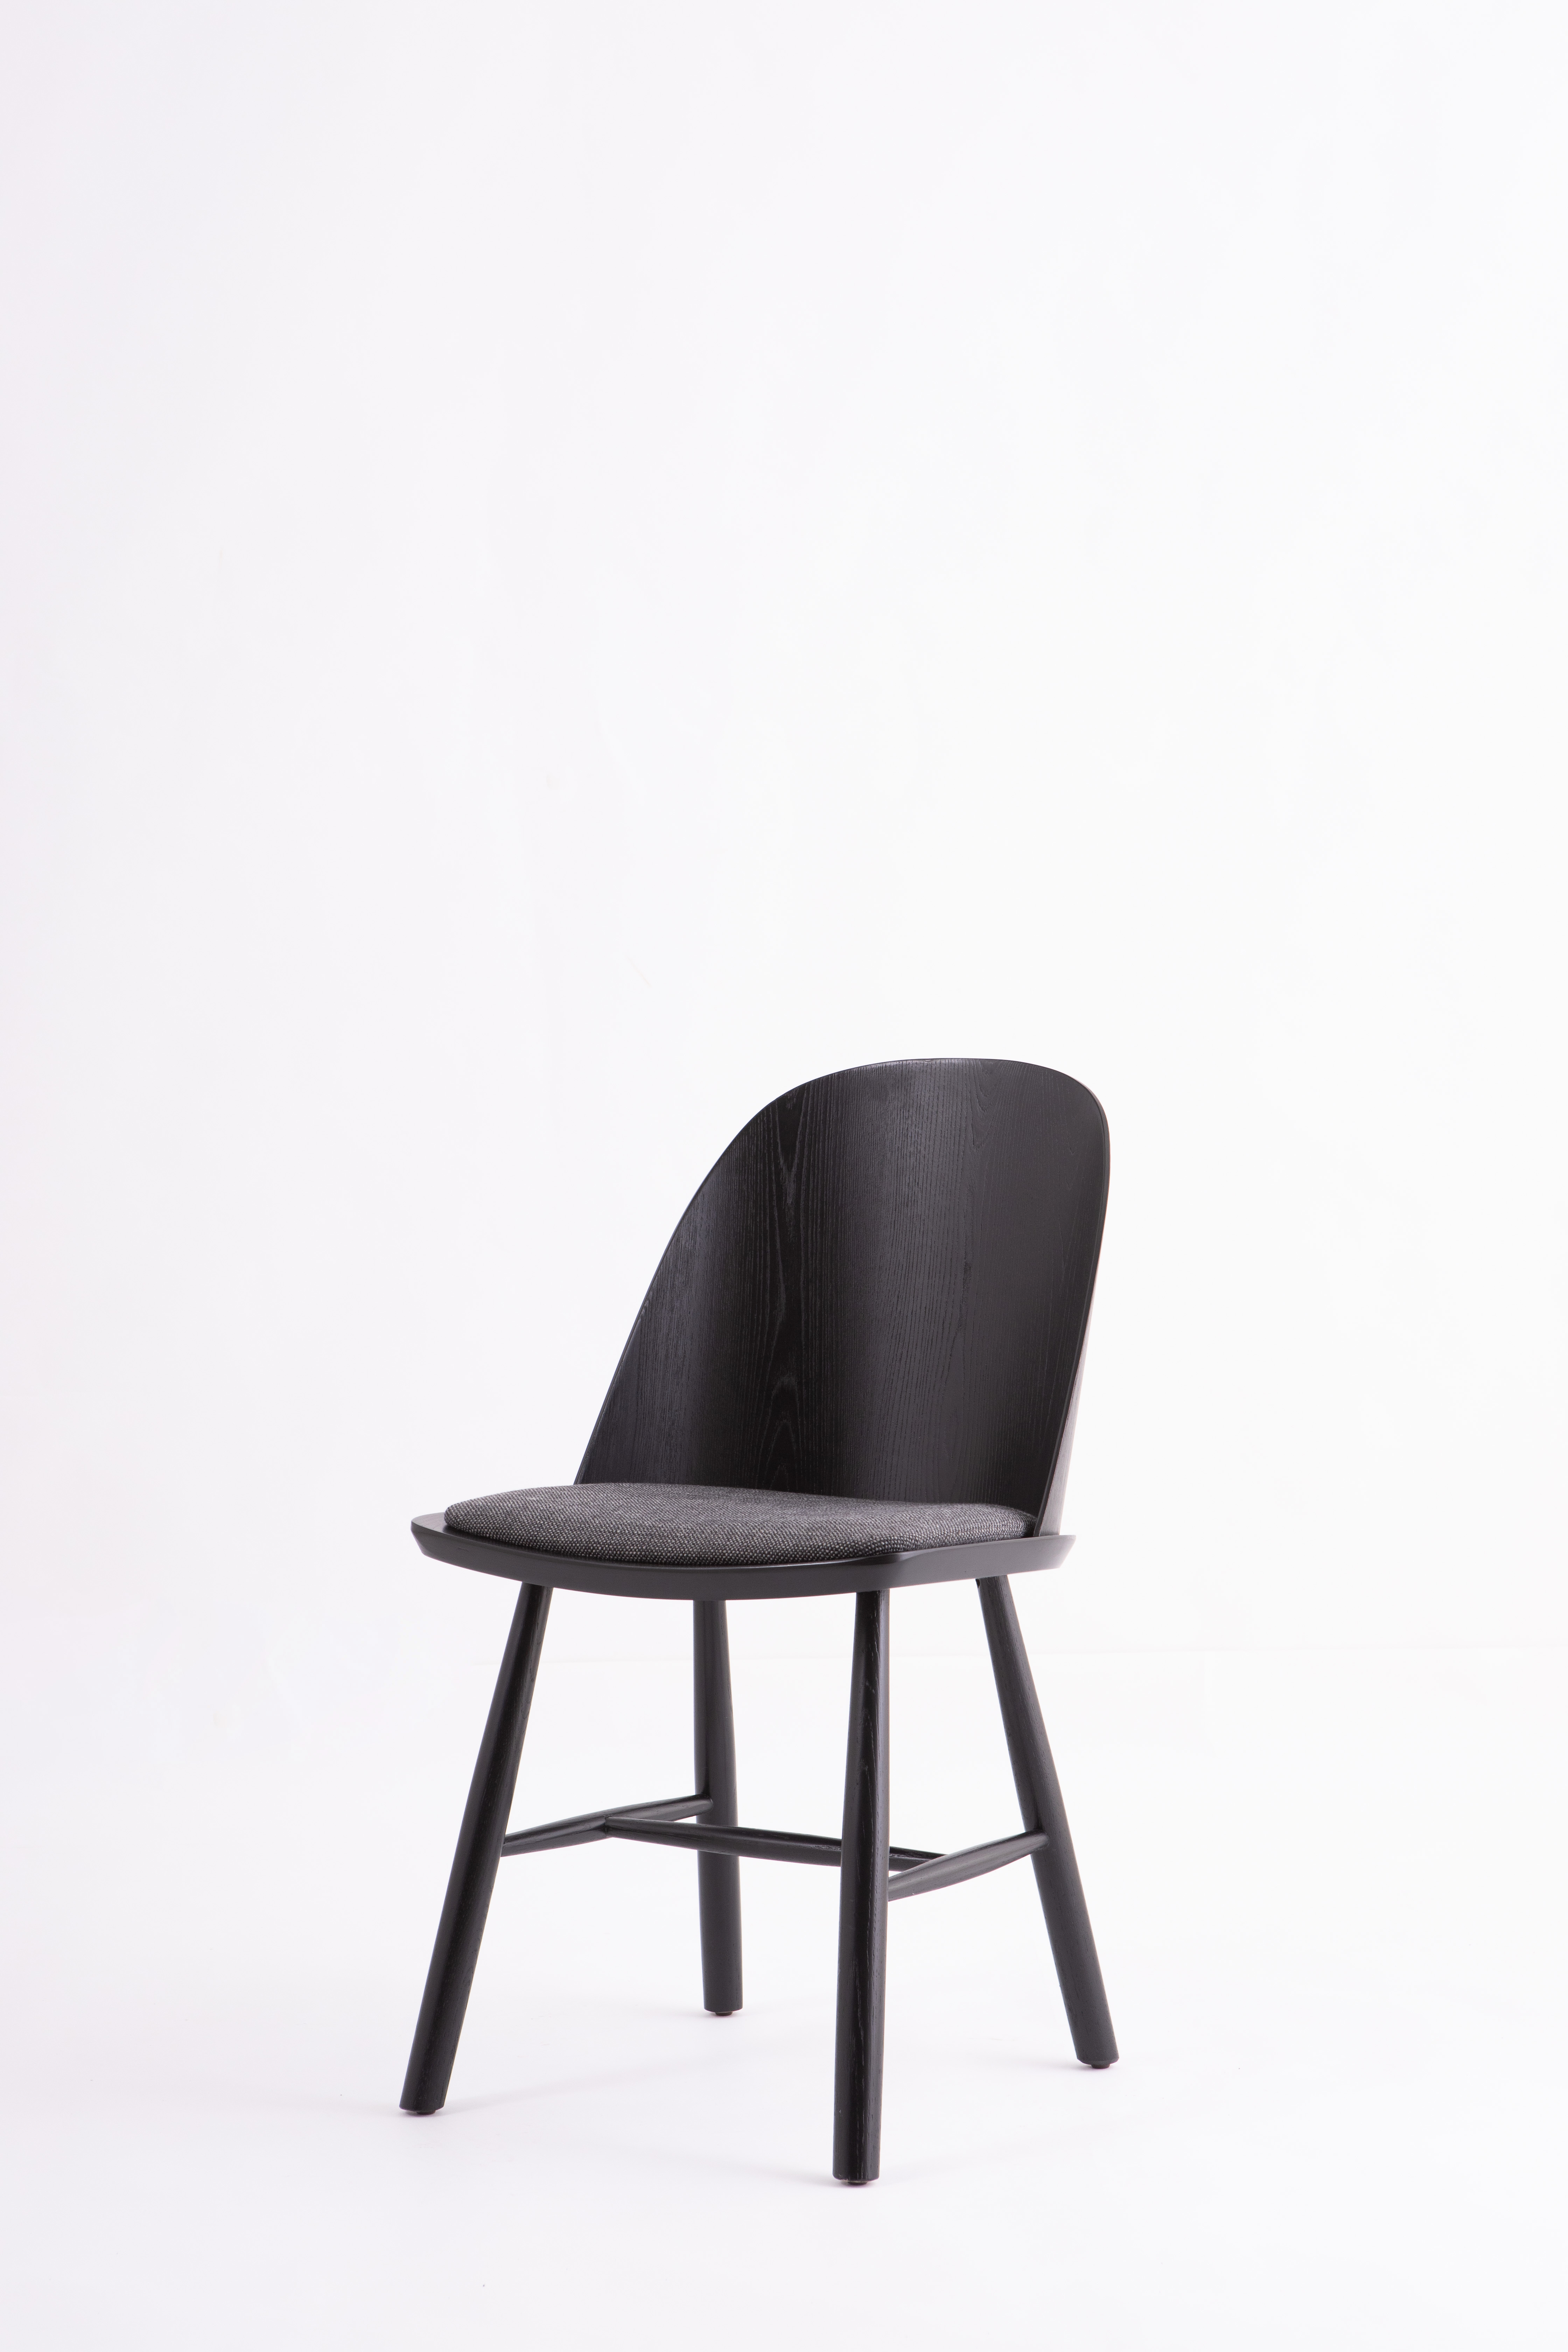 C17 Chair